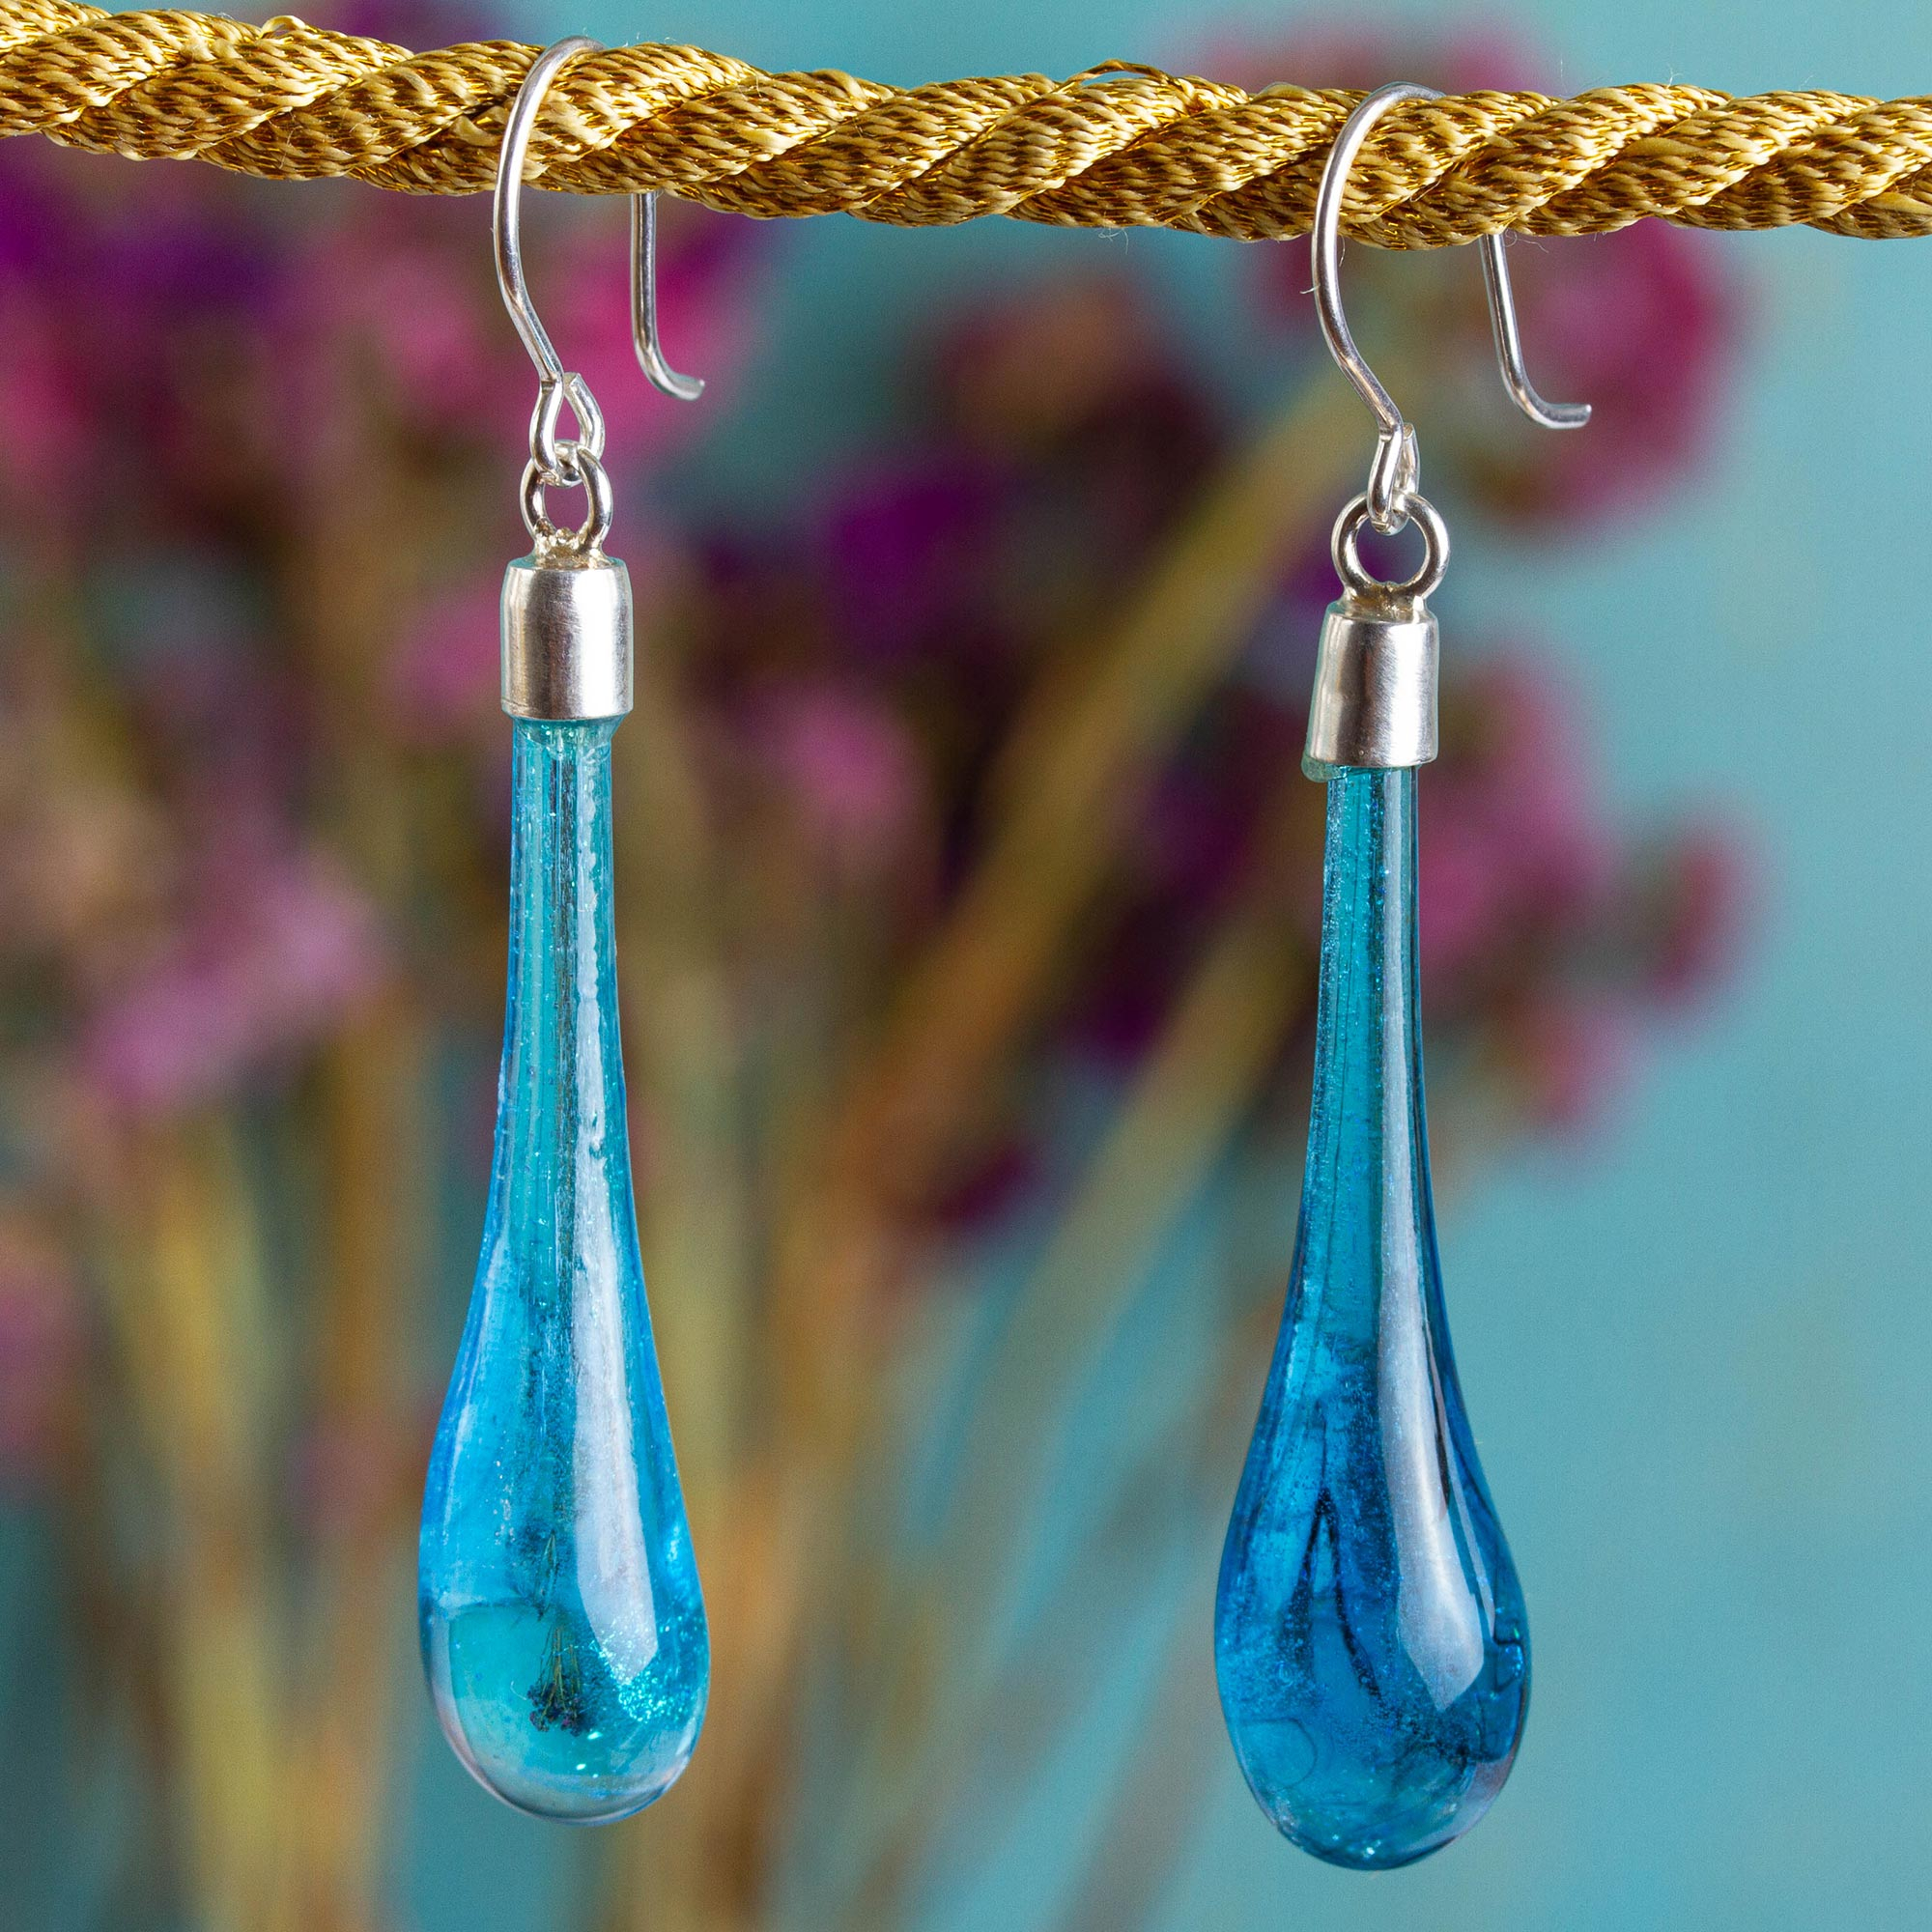 fused glass pendant multi-coloured dichroic dichroic glass necklace Seashore landscape dichroic pendant fused glass necklace gift